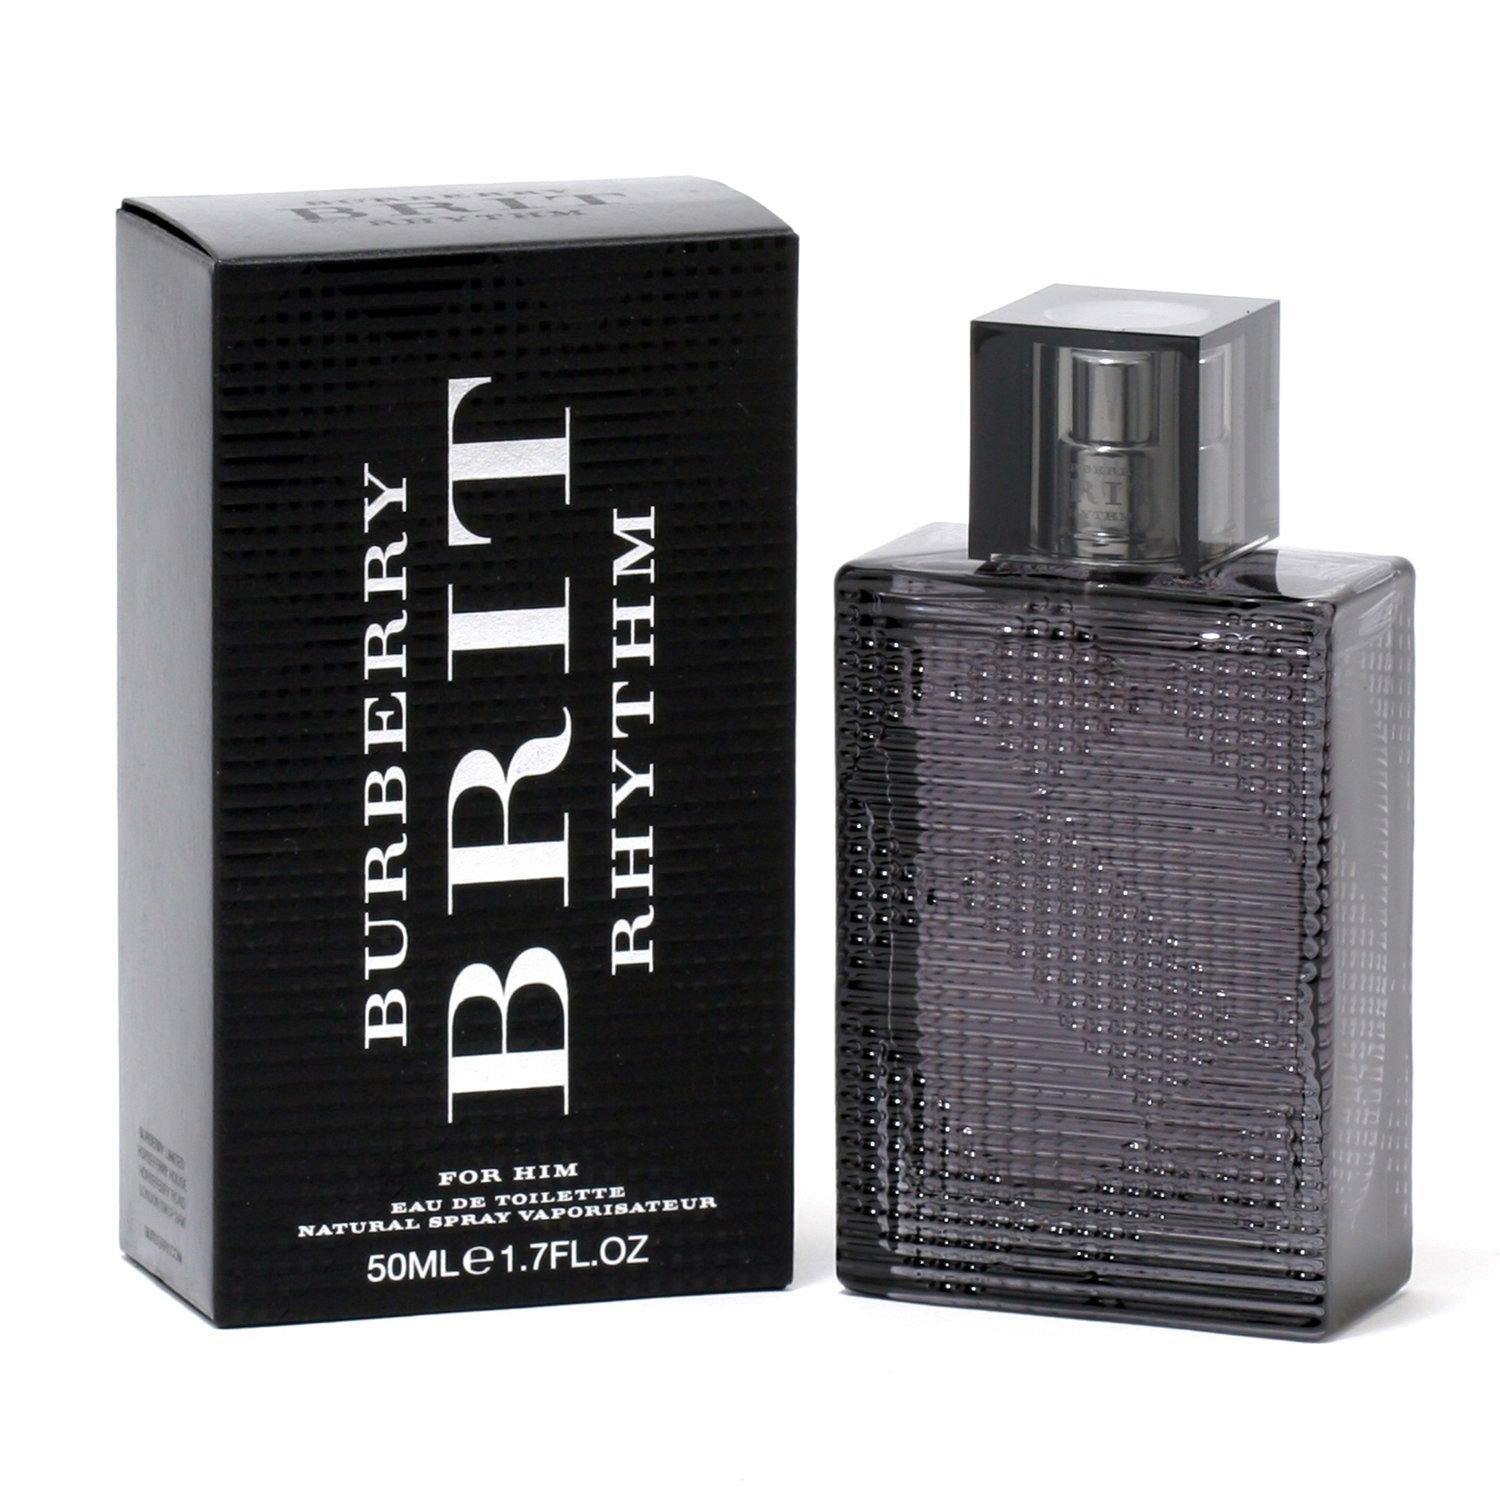 BURBERRY BRIT RHYTHM FOR MEN - DE Room TOILETTE Fragrance – SPRAY EAU